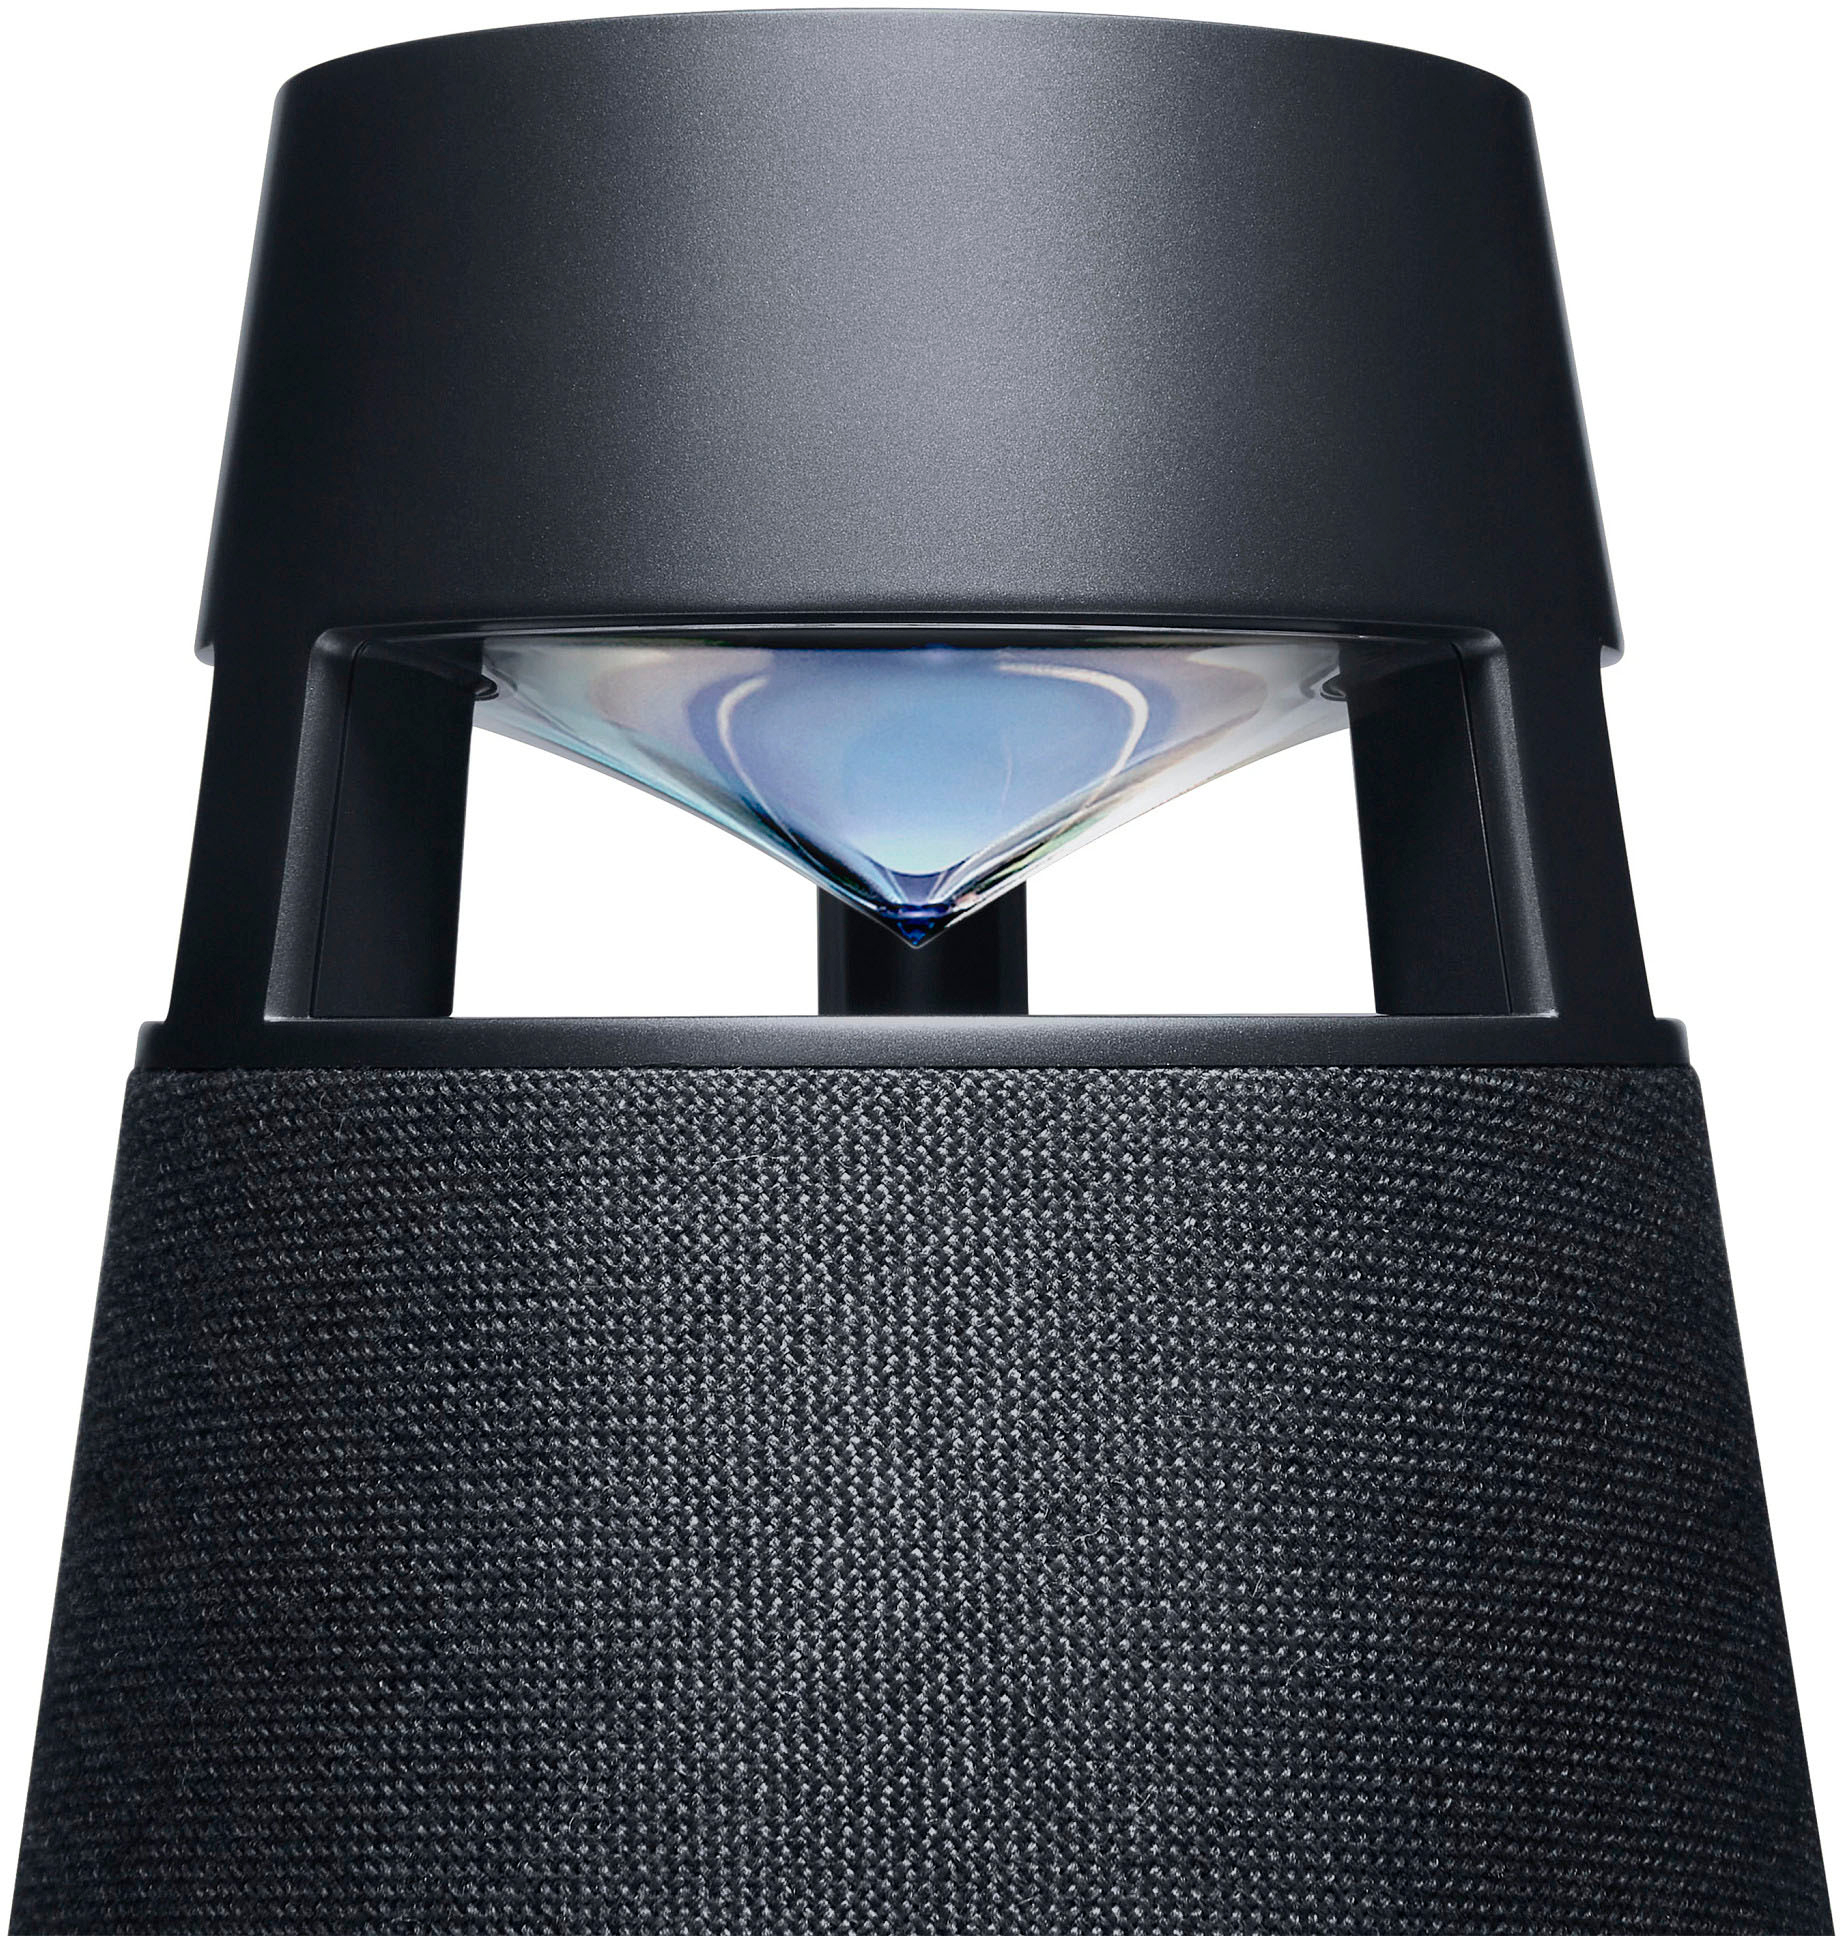 Black Buy Speaker Bluetooth XBOOM 360 - LG Best Portable XO3QBK